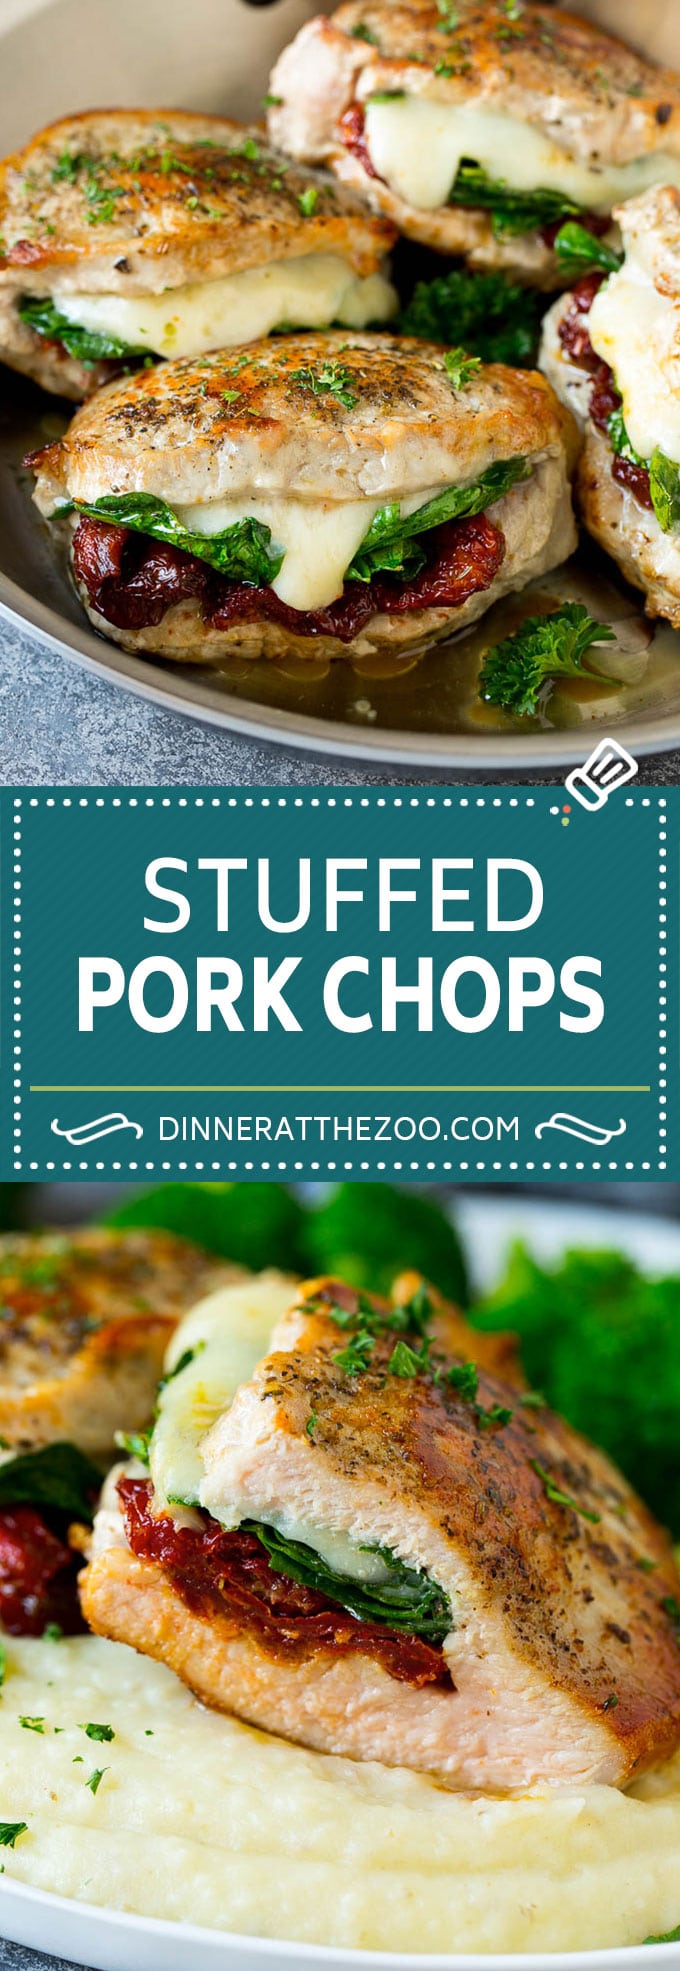 Stuffed Pork Chops Recipe | Boneless Pork Chops Recipe | Italian Pork Chops #pork #porkchops #cheese #lowcarb #dinner #dinneratthezoo